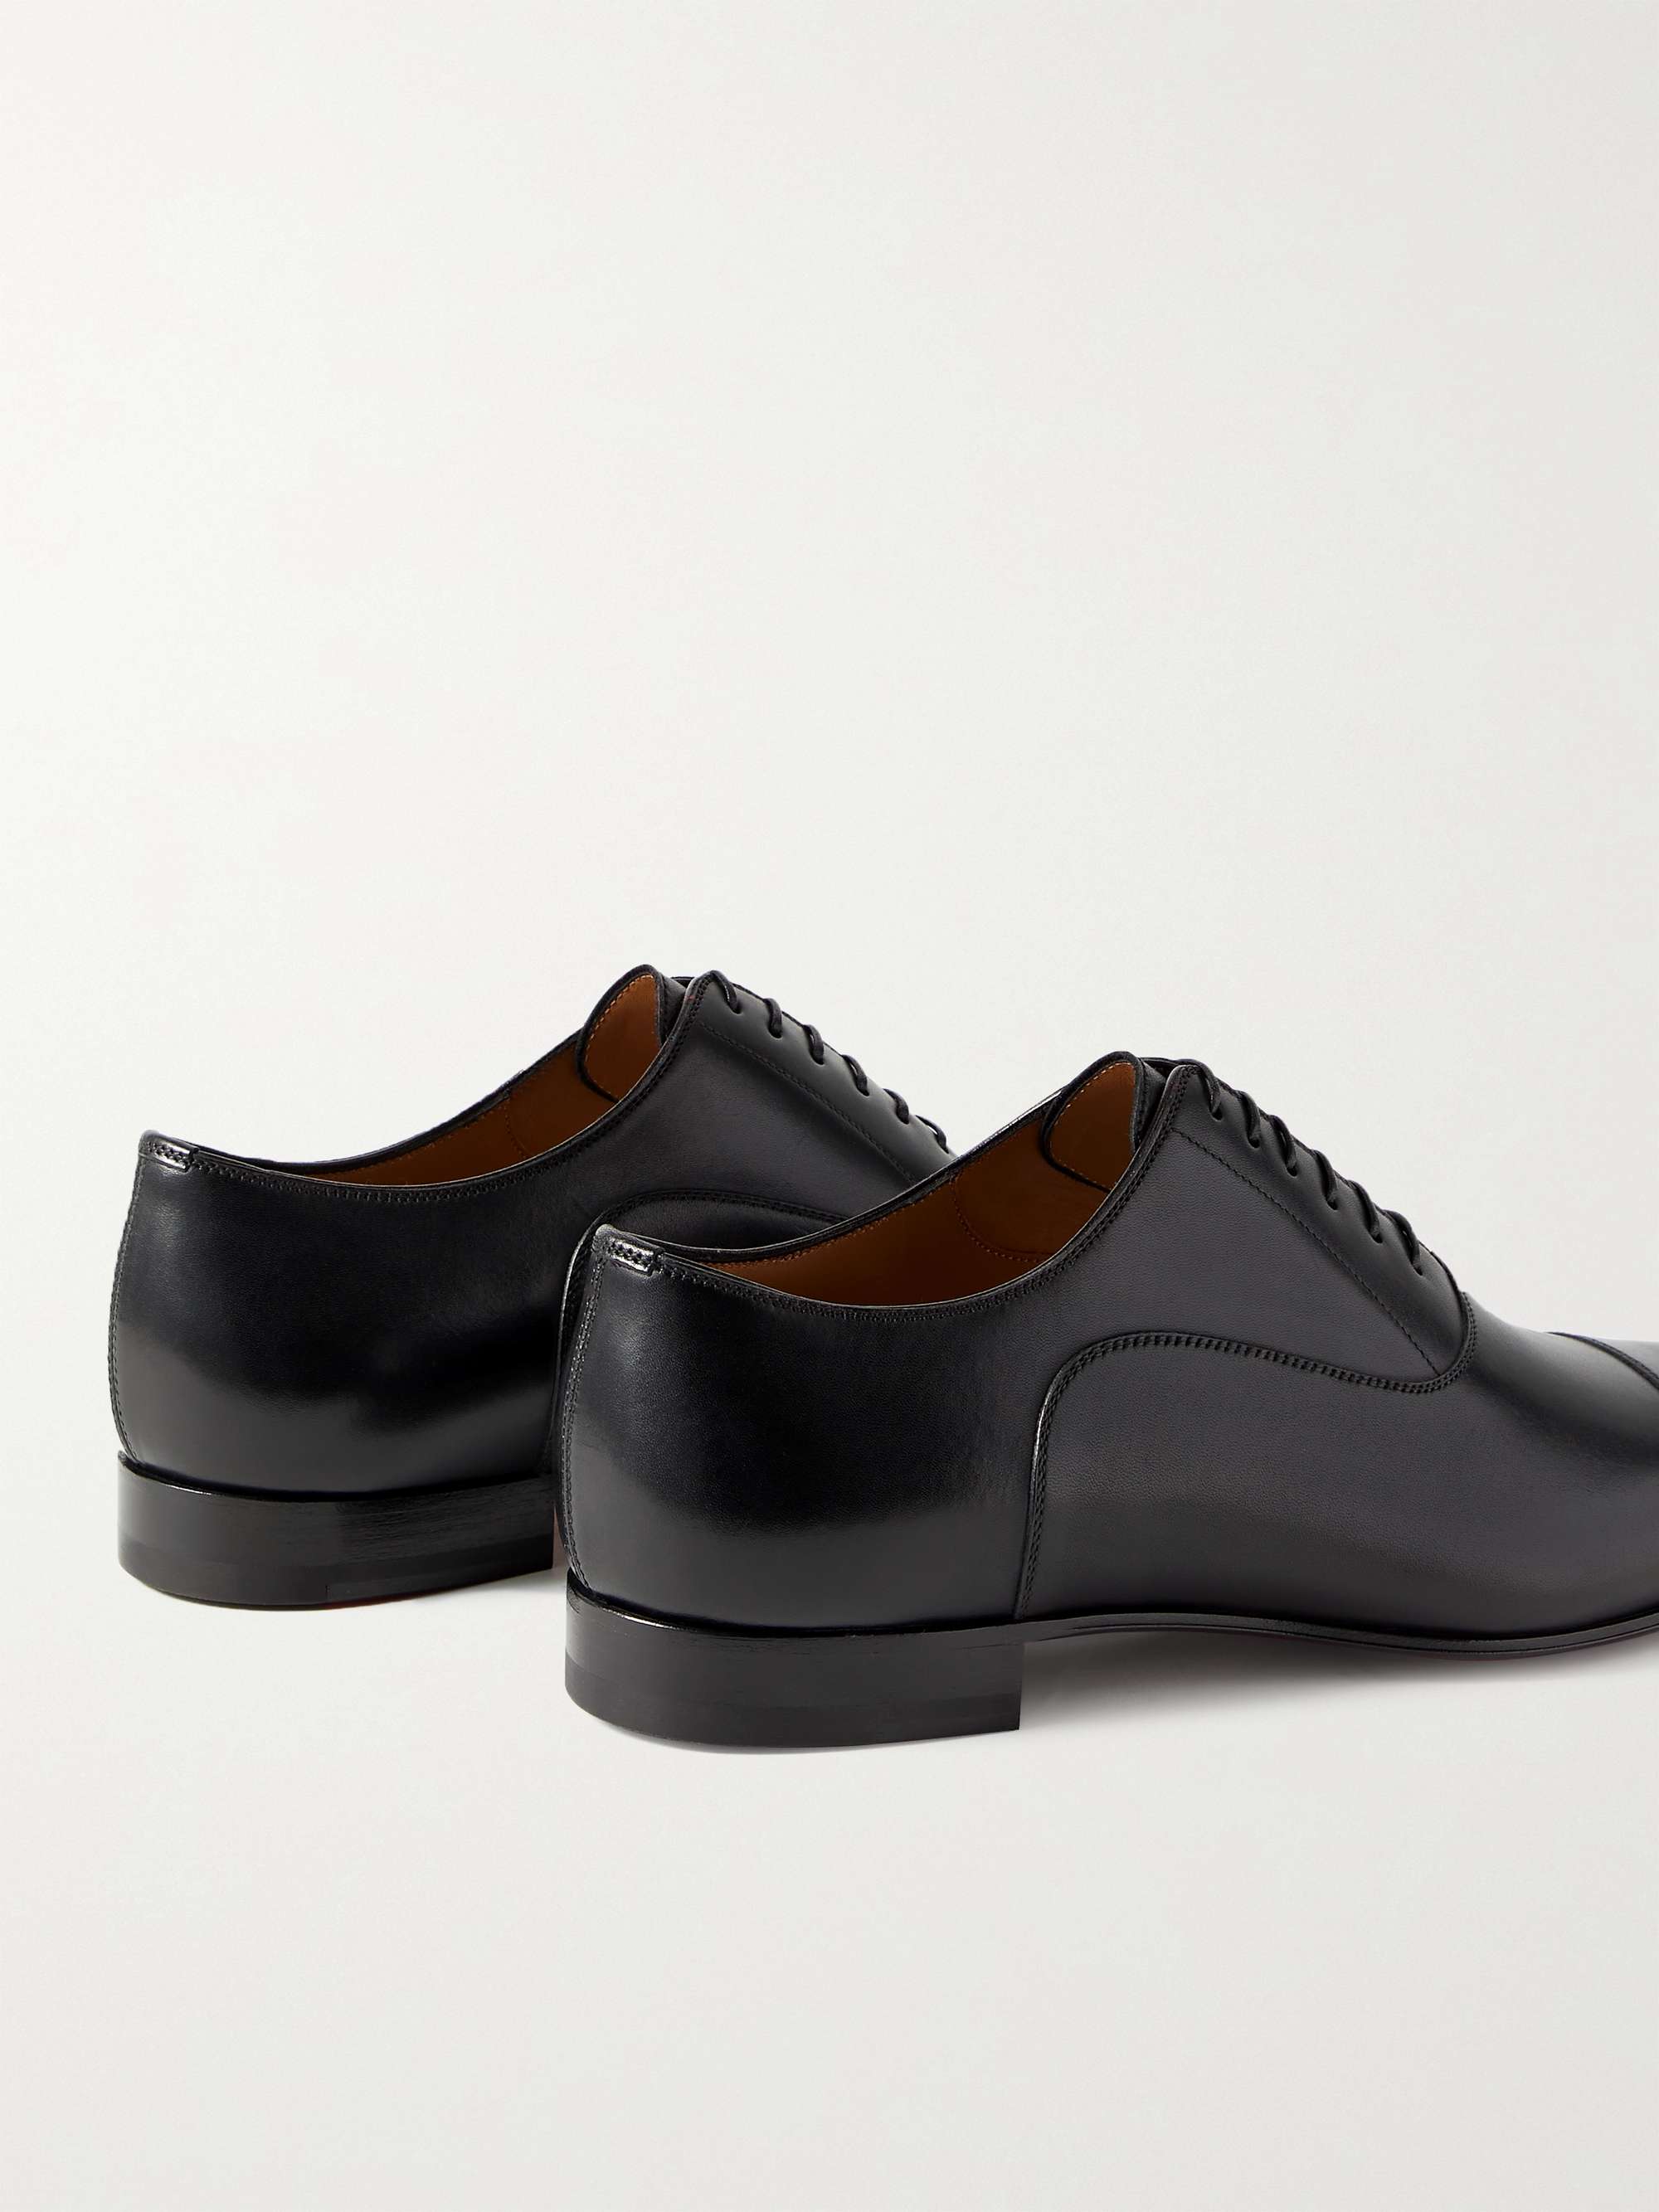 CHRISTIAN LOUBOUTIN Greggo Leather Oxford Shoes